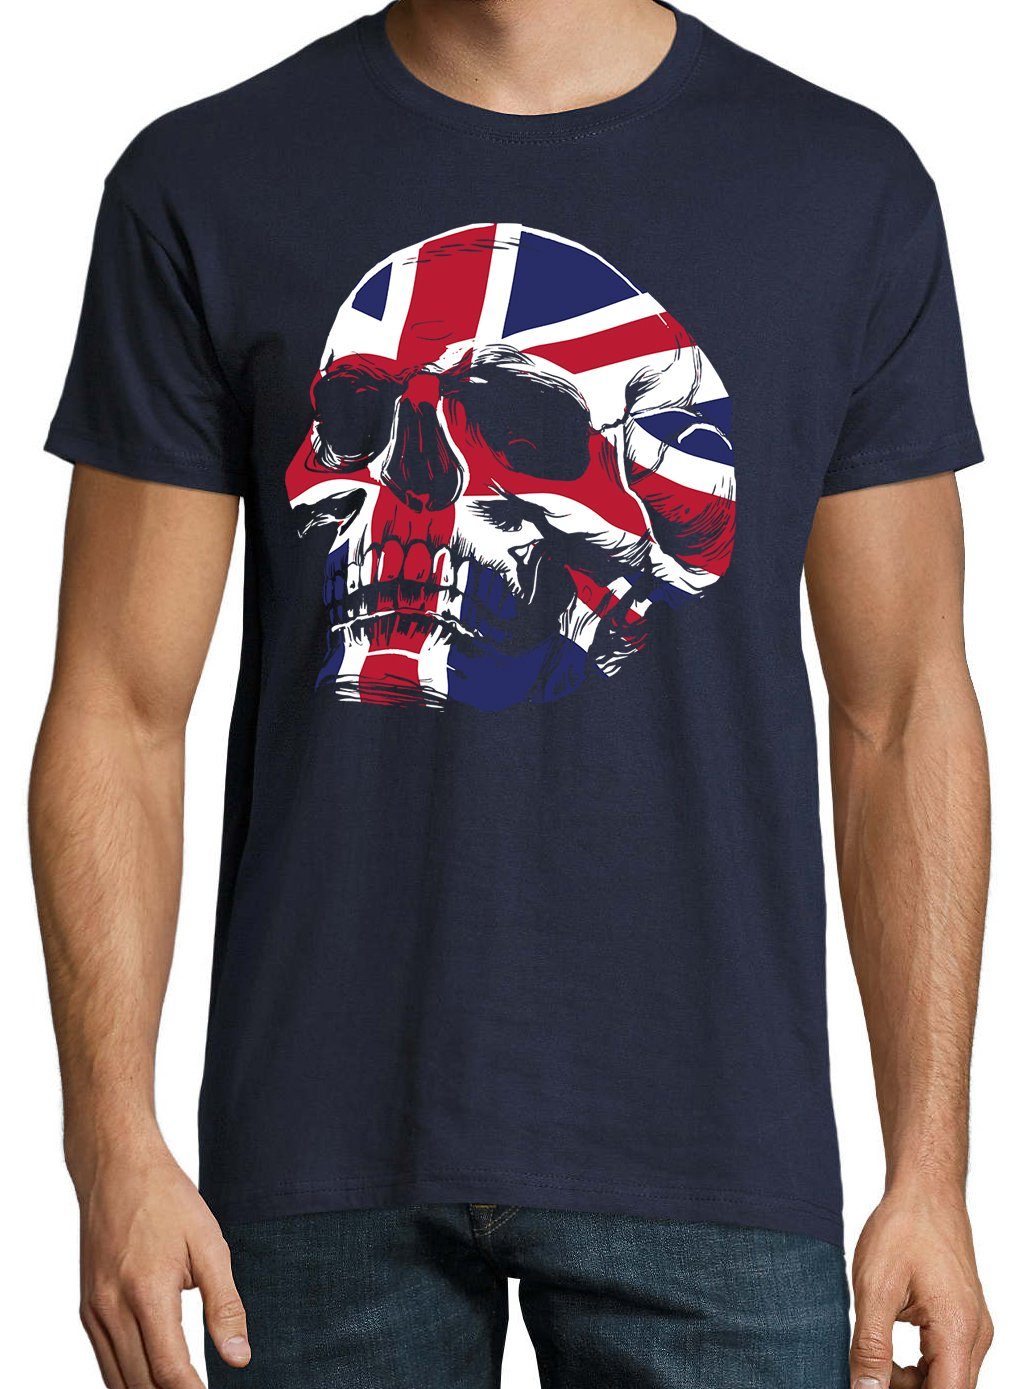 Schädel mit Youth Herren Frontprint UK T-Shirt Logo Designz England Navyblau Totenkopf trendigem Shirt